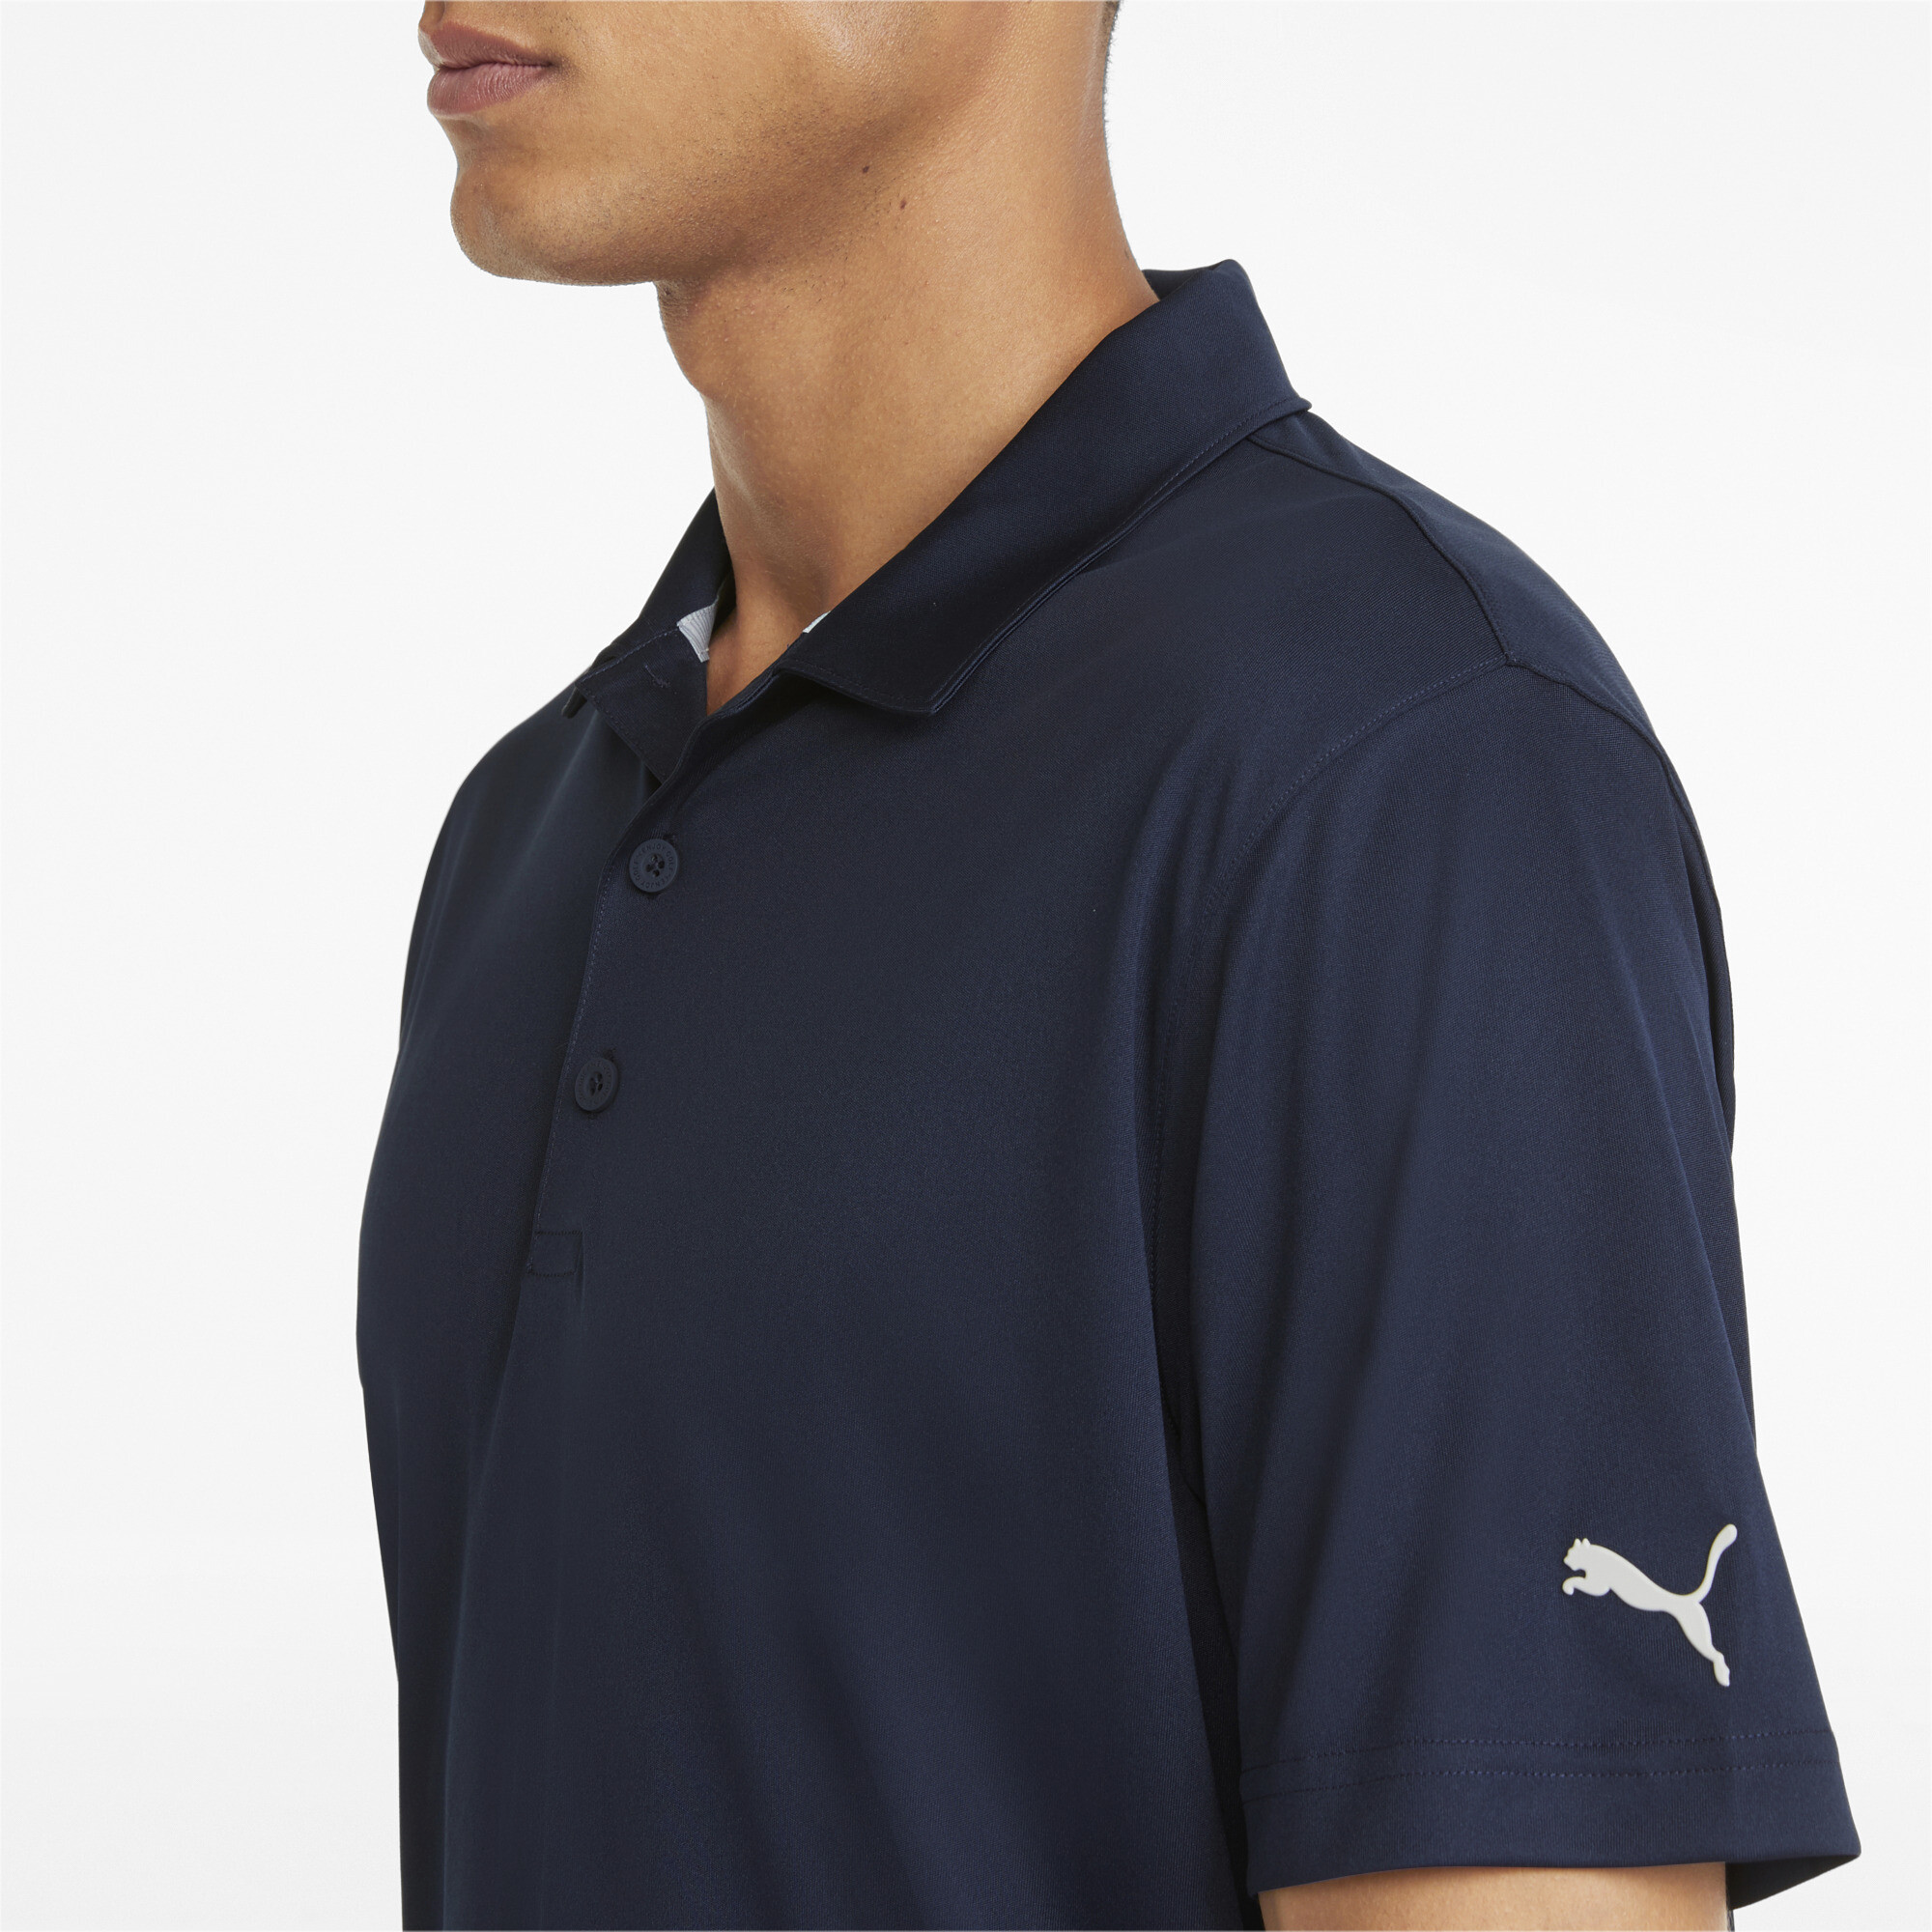 Men's Puma Gamer's Golf Polo Shirt T-Shirt, Blue T-Shirt, Size XL T-Shirt, Clothing